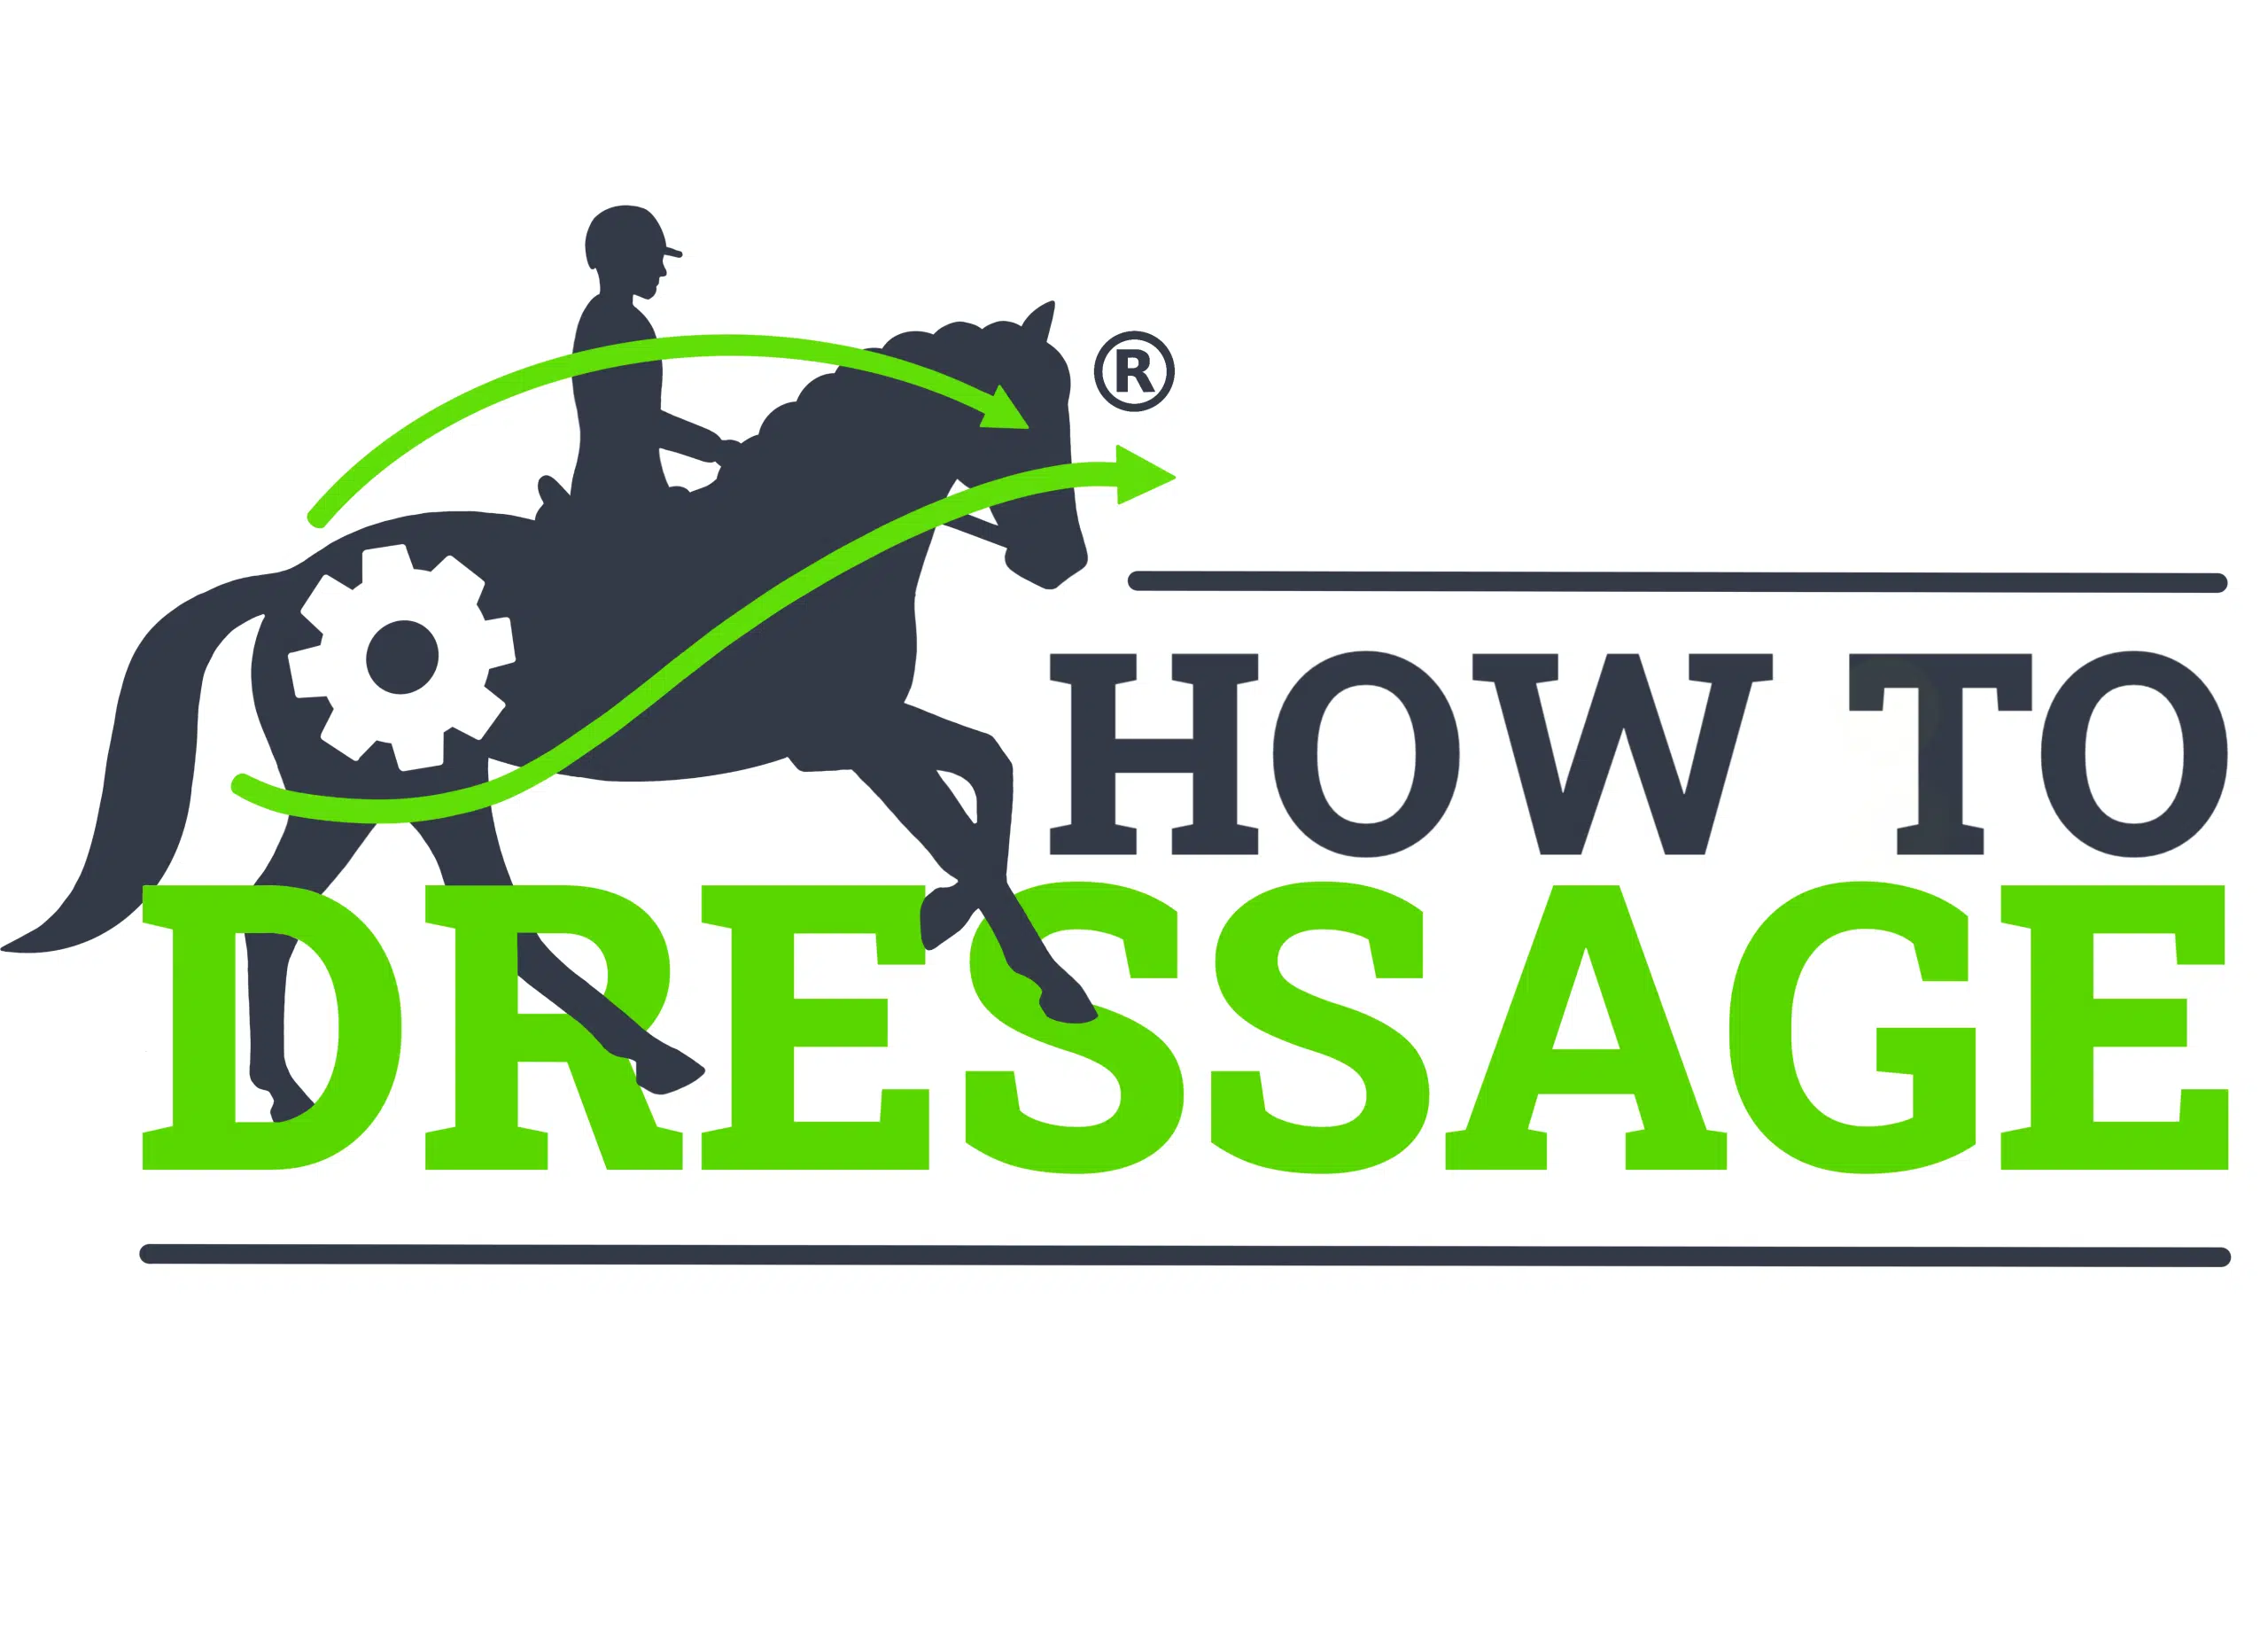 how to dressage logo full